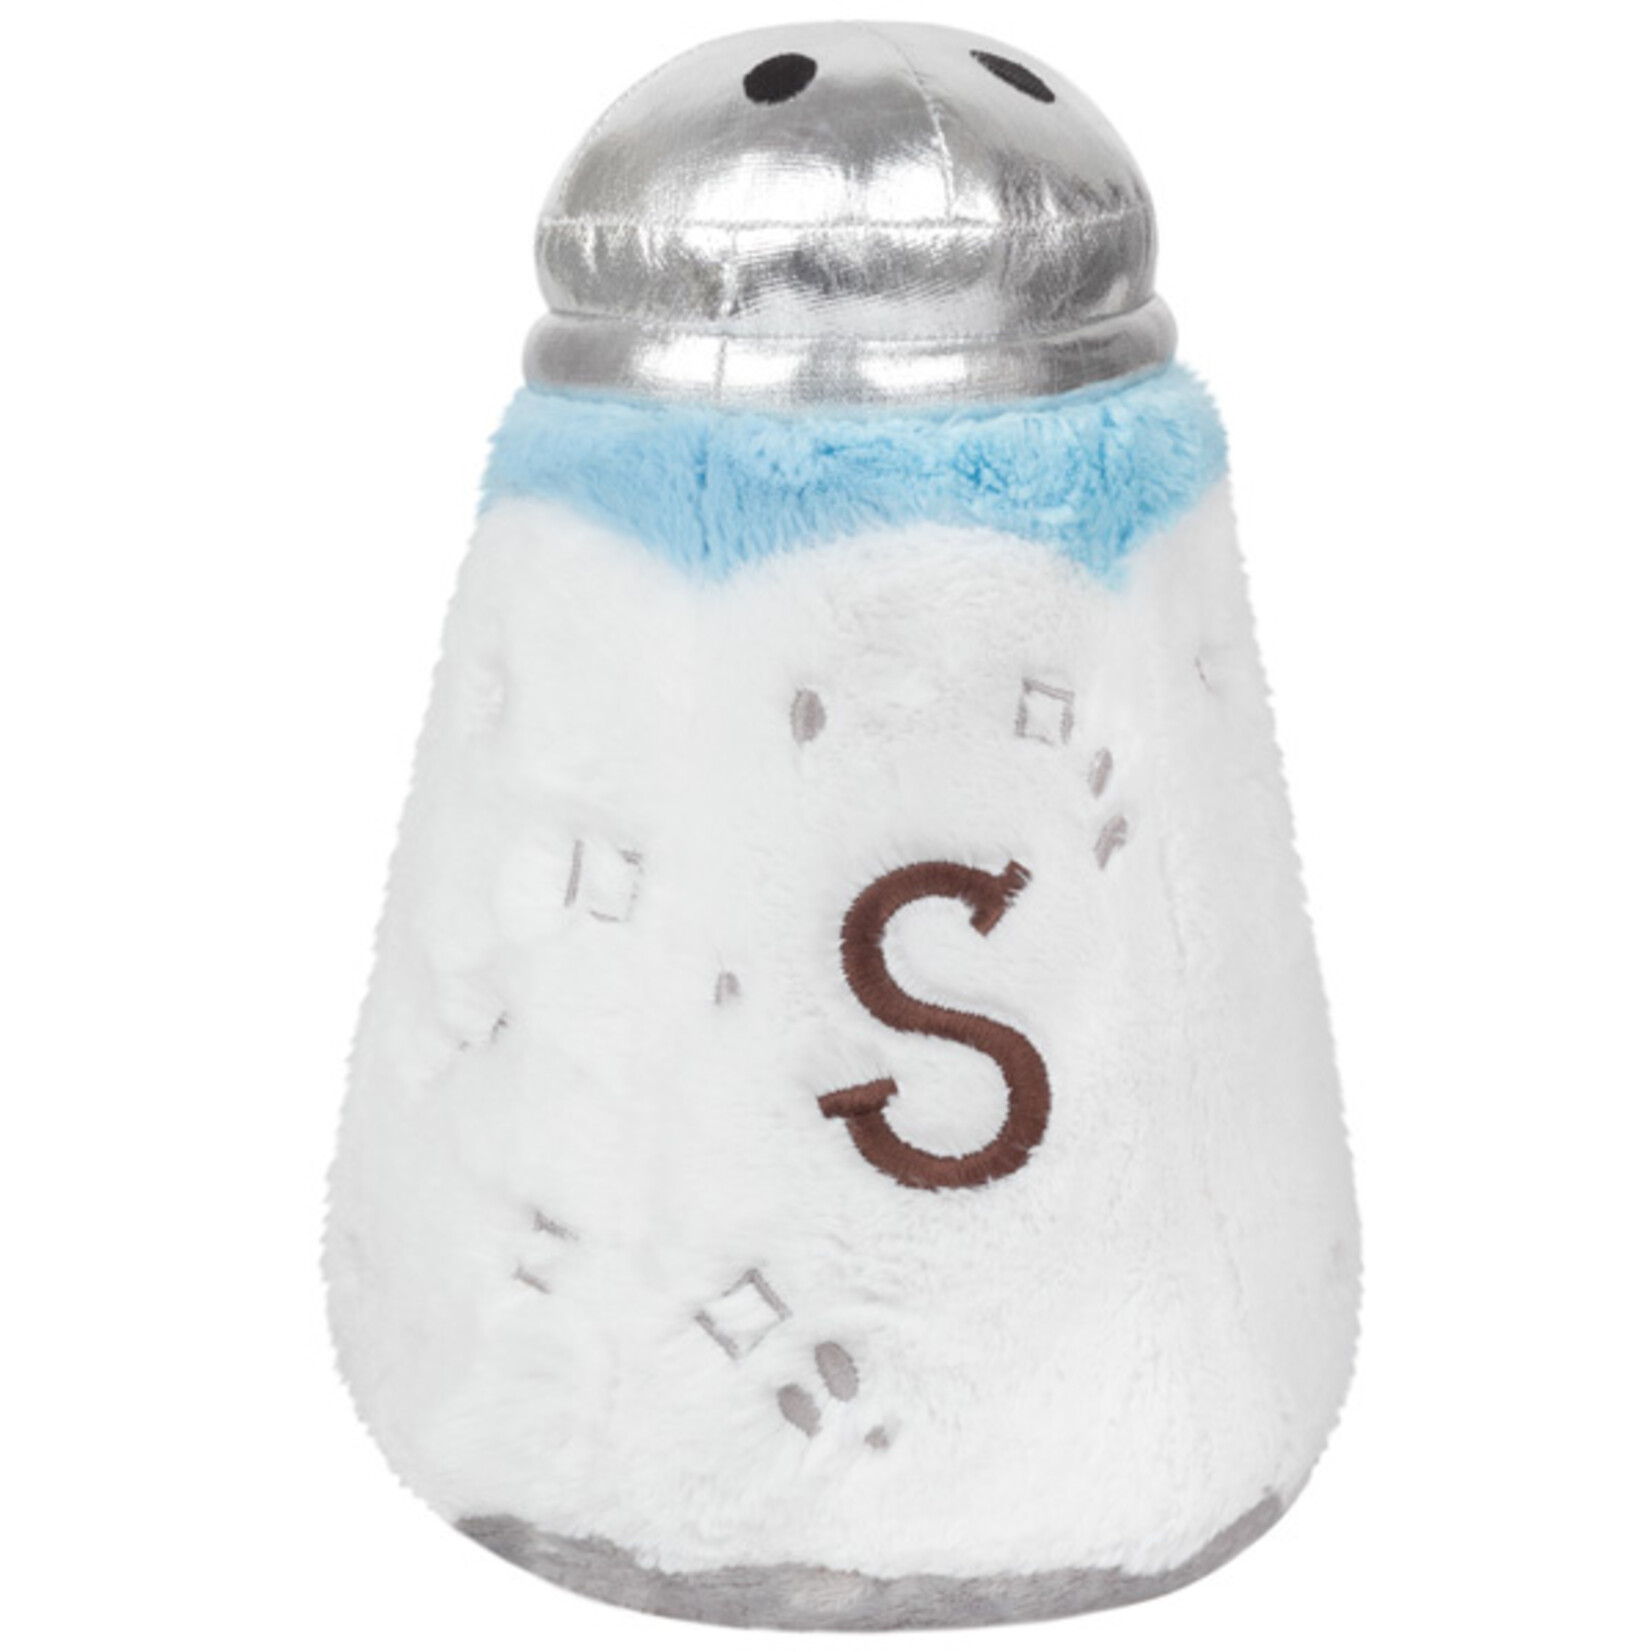 Squishable Salt Mini Comfort Food